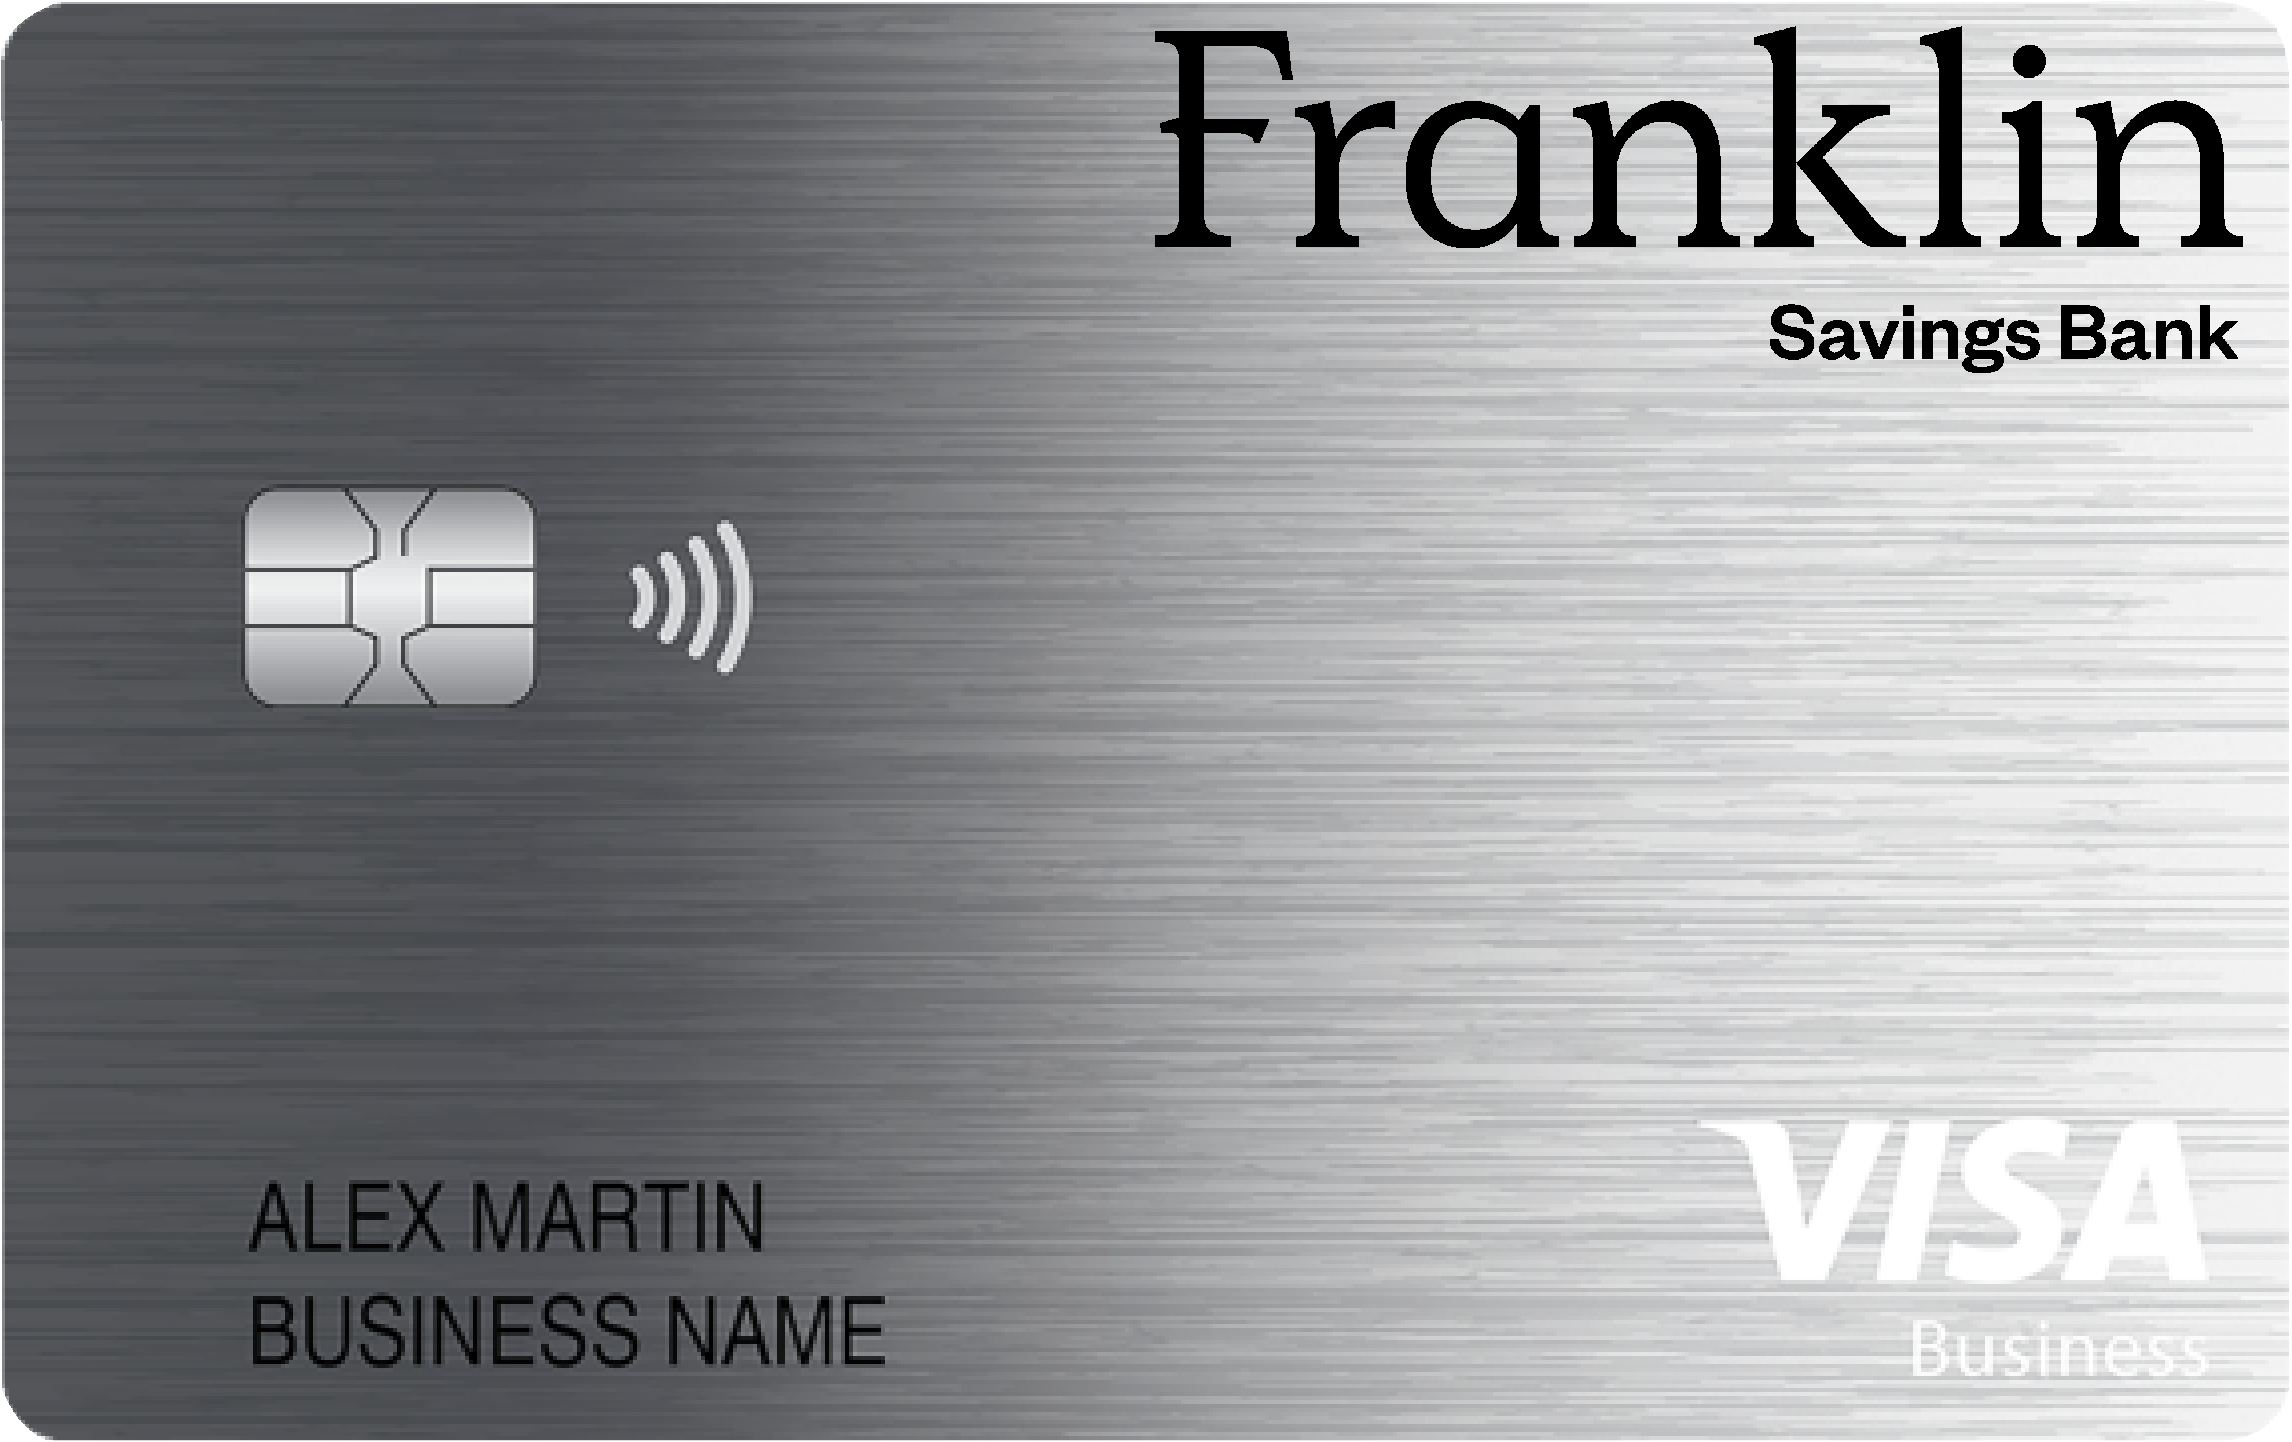 Franklin Savings Bank Business Card Card